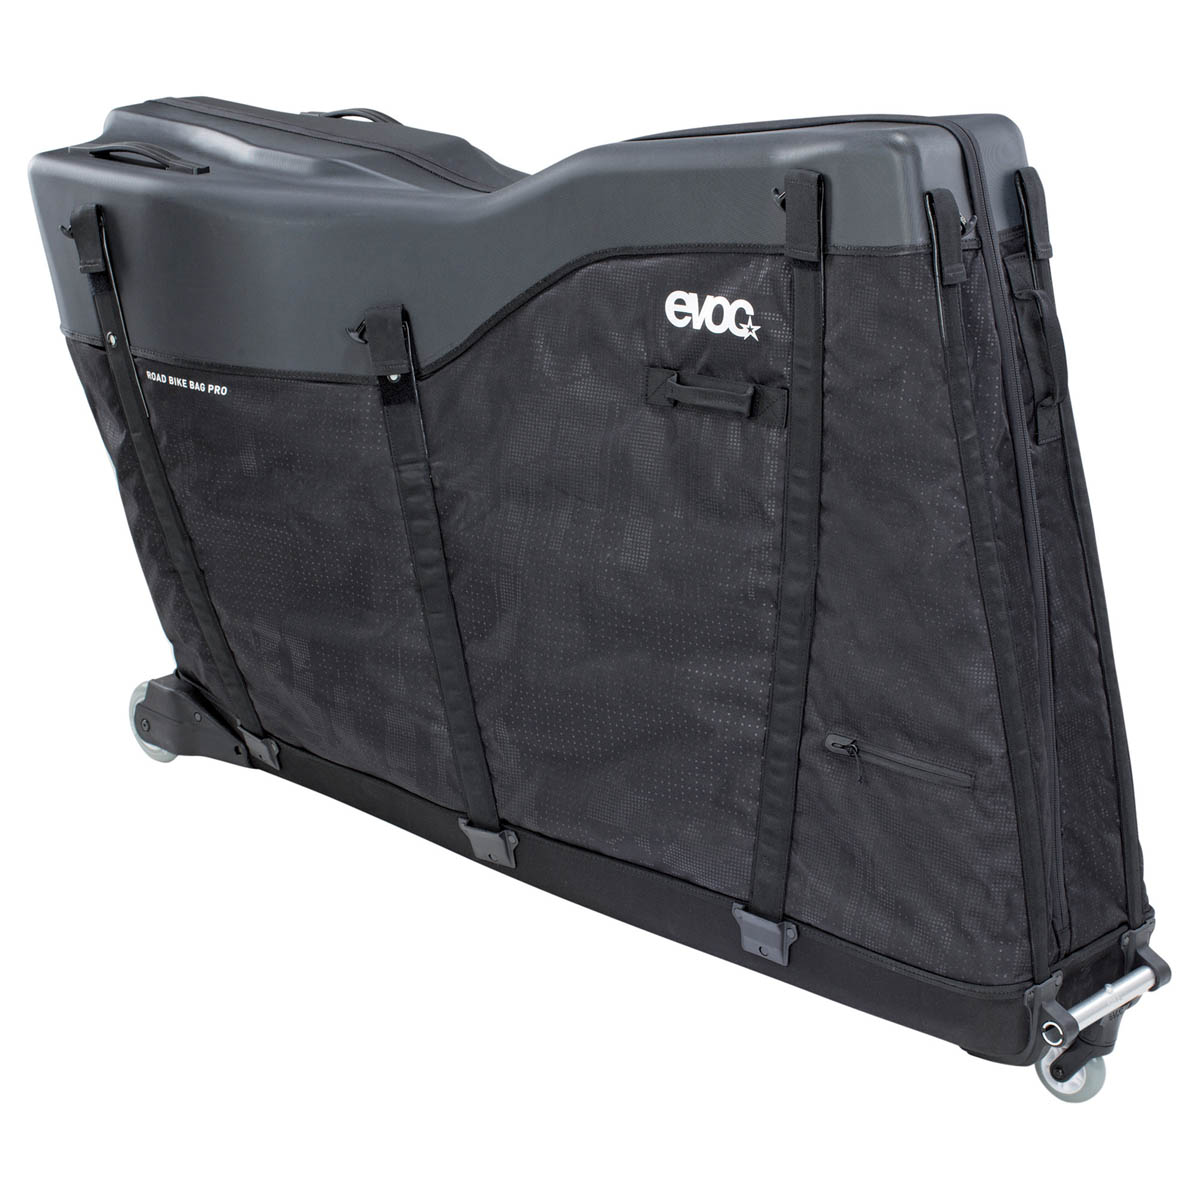 Evoc Road Bag Pro 300l - Black